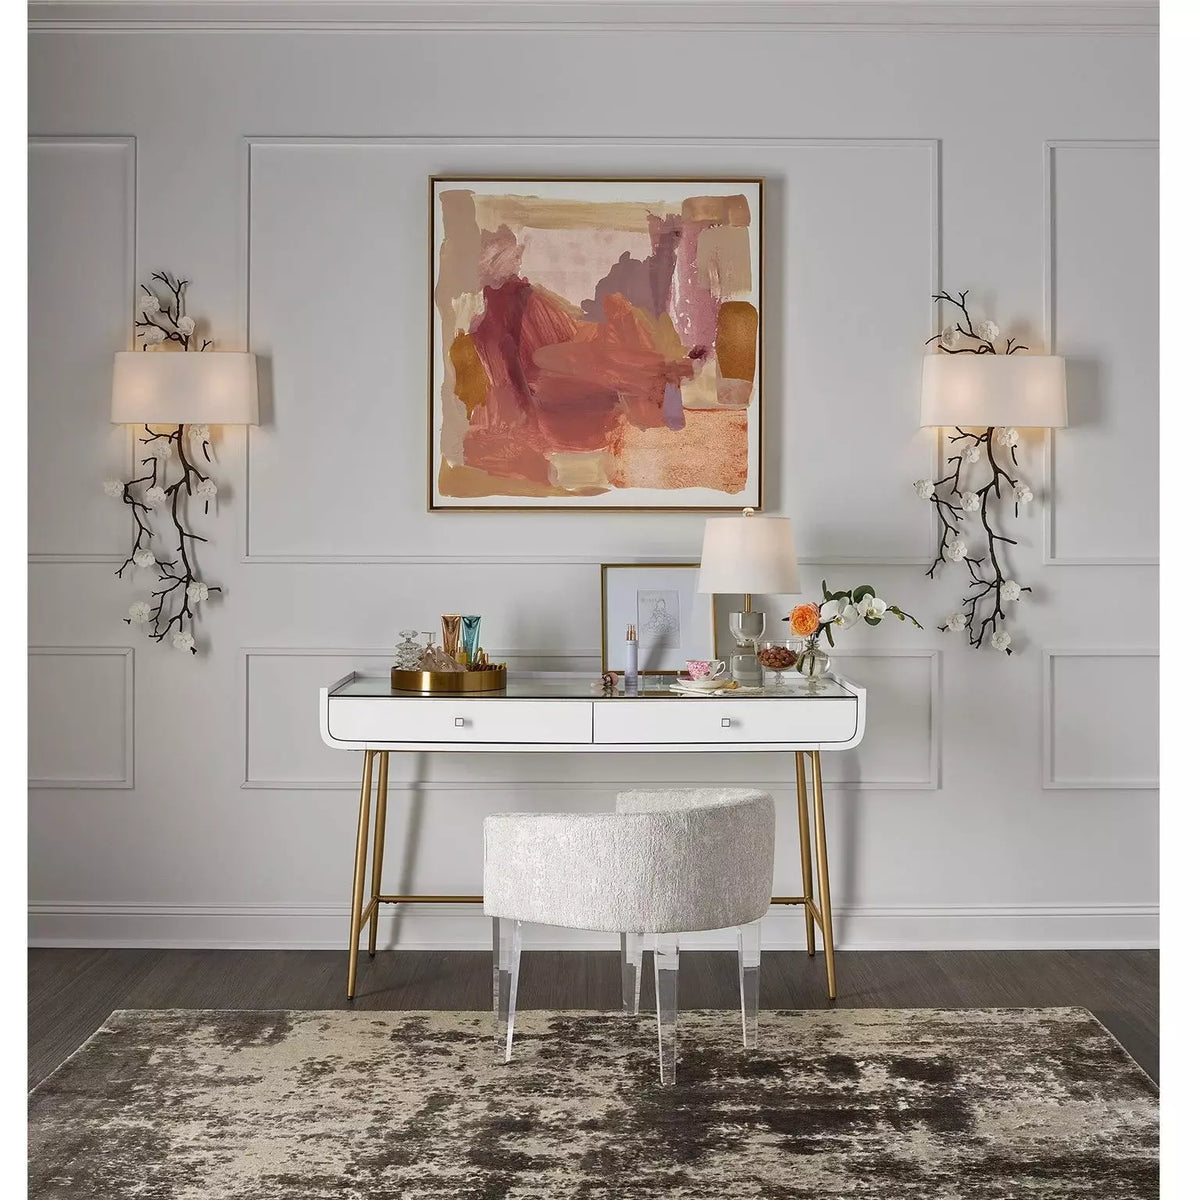 Love Joy Bliss Vanity Chair - Be Bold Furniture